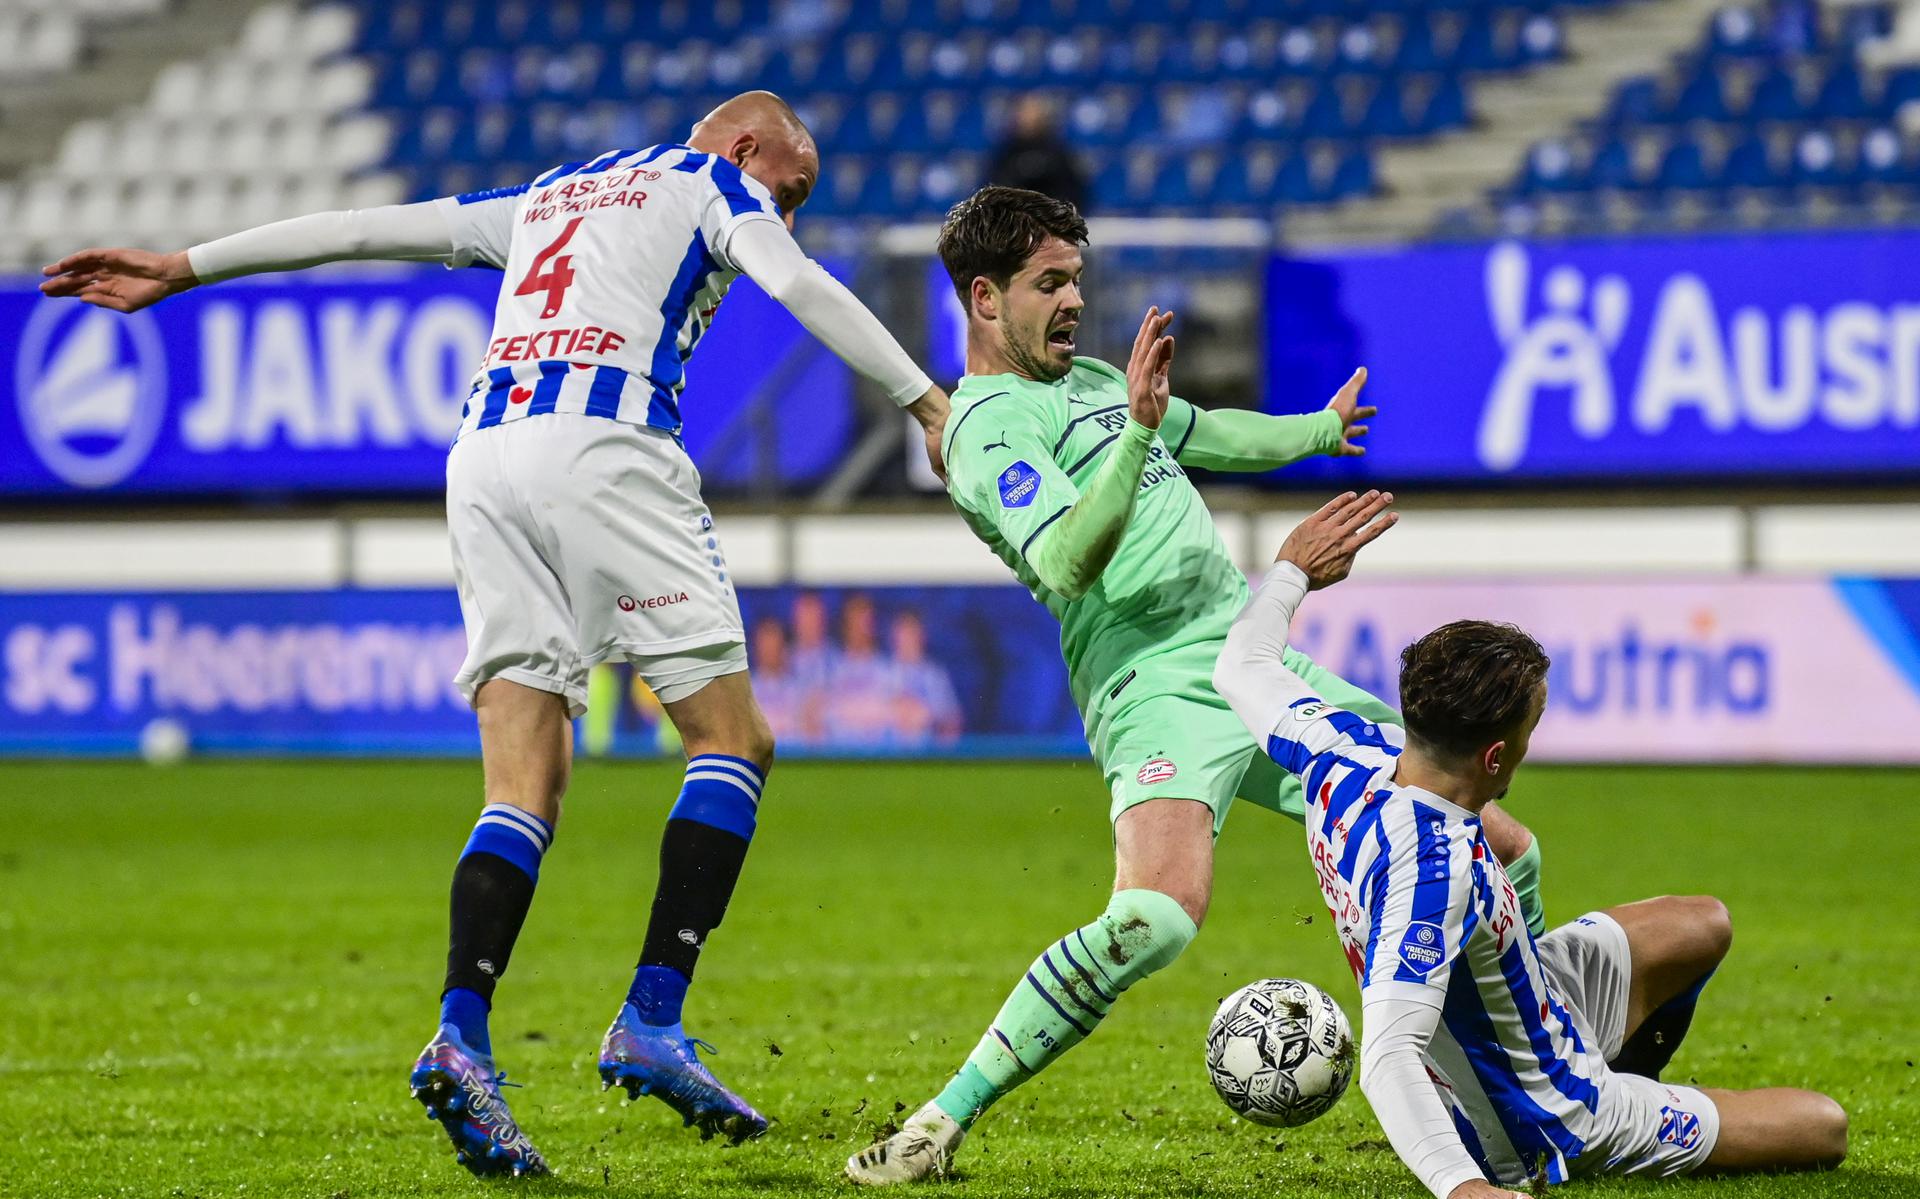 Follow Heracles Almelo against SC Heerenveen in the Eredivisie |  live blog